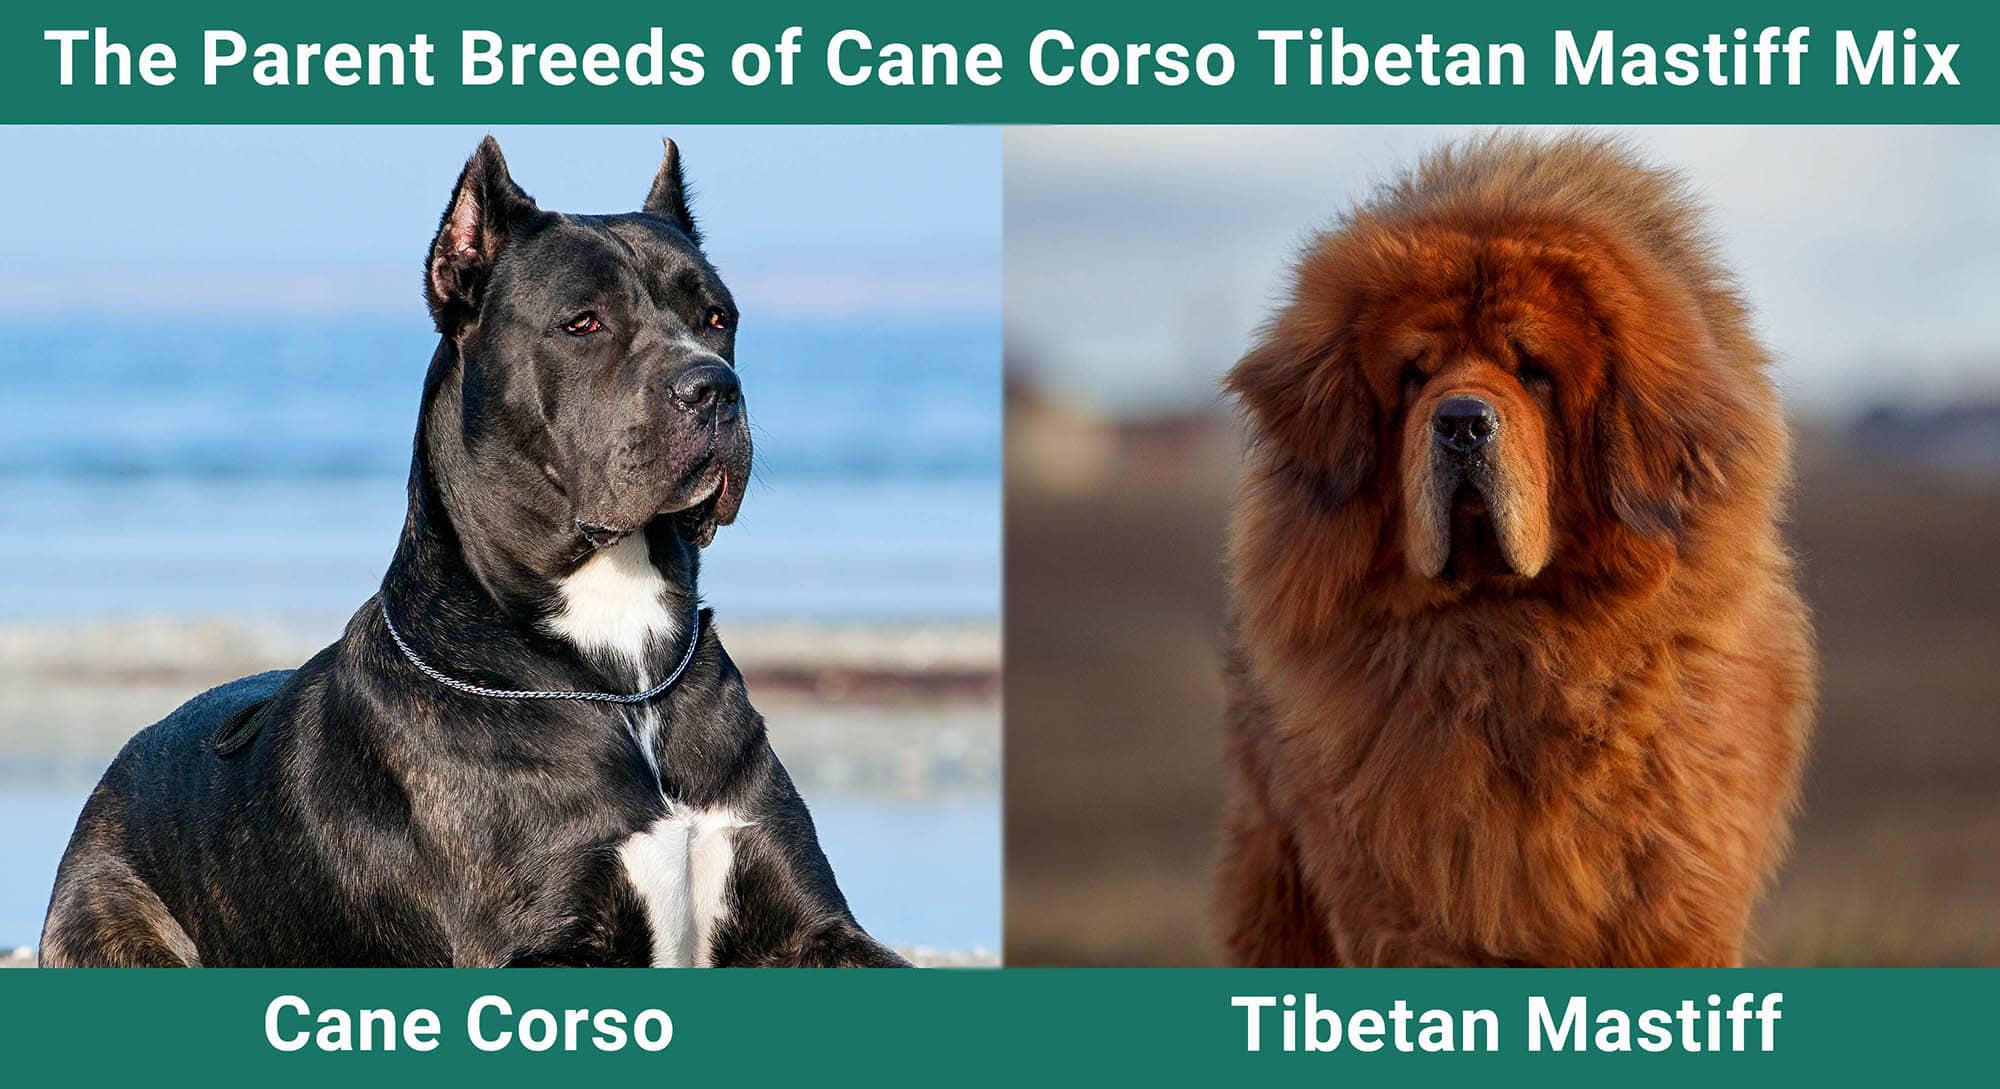 The Parent Breeds of Cane Corso Tibetan Mastiff Mix